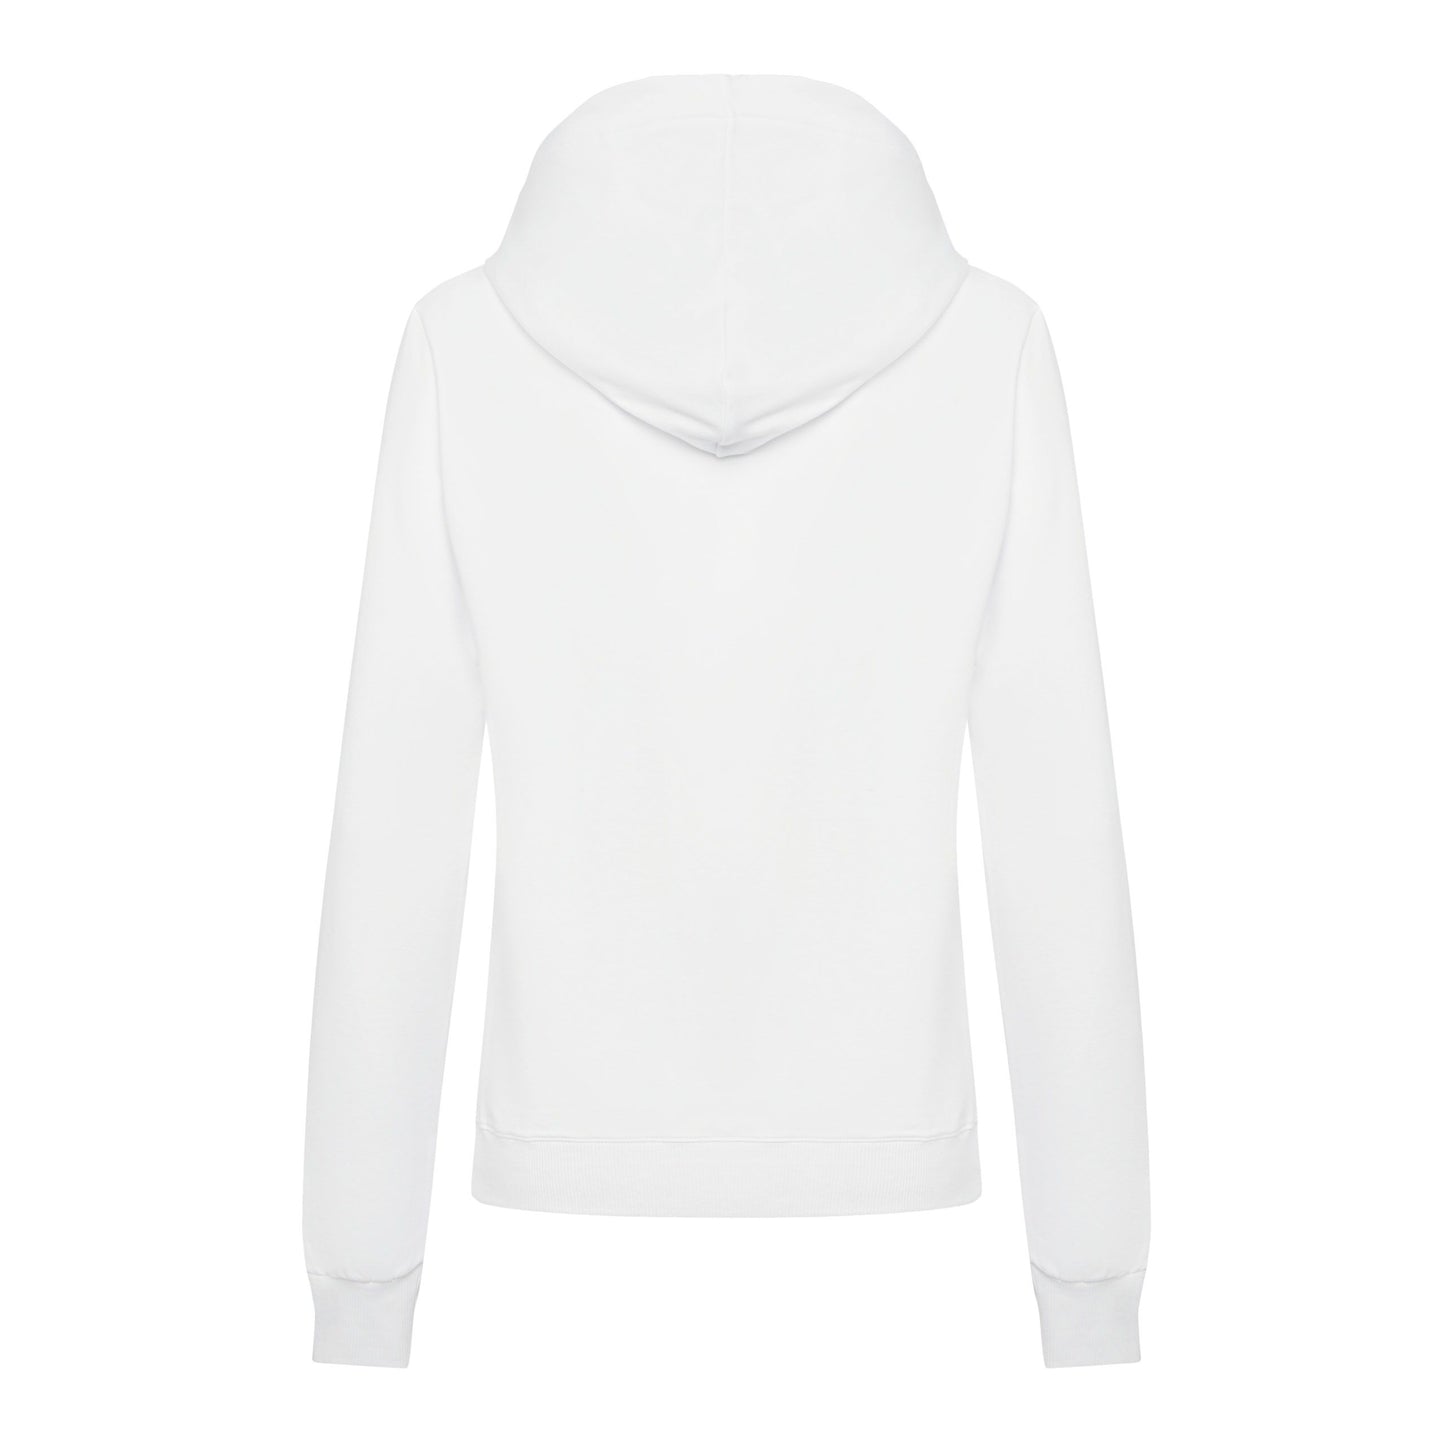 Elegant White Hooded Sweatshirt with Strass Logo